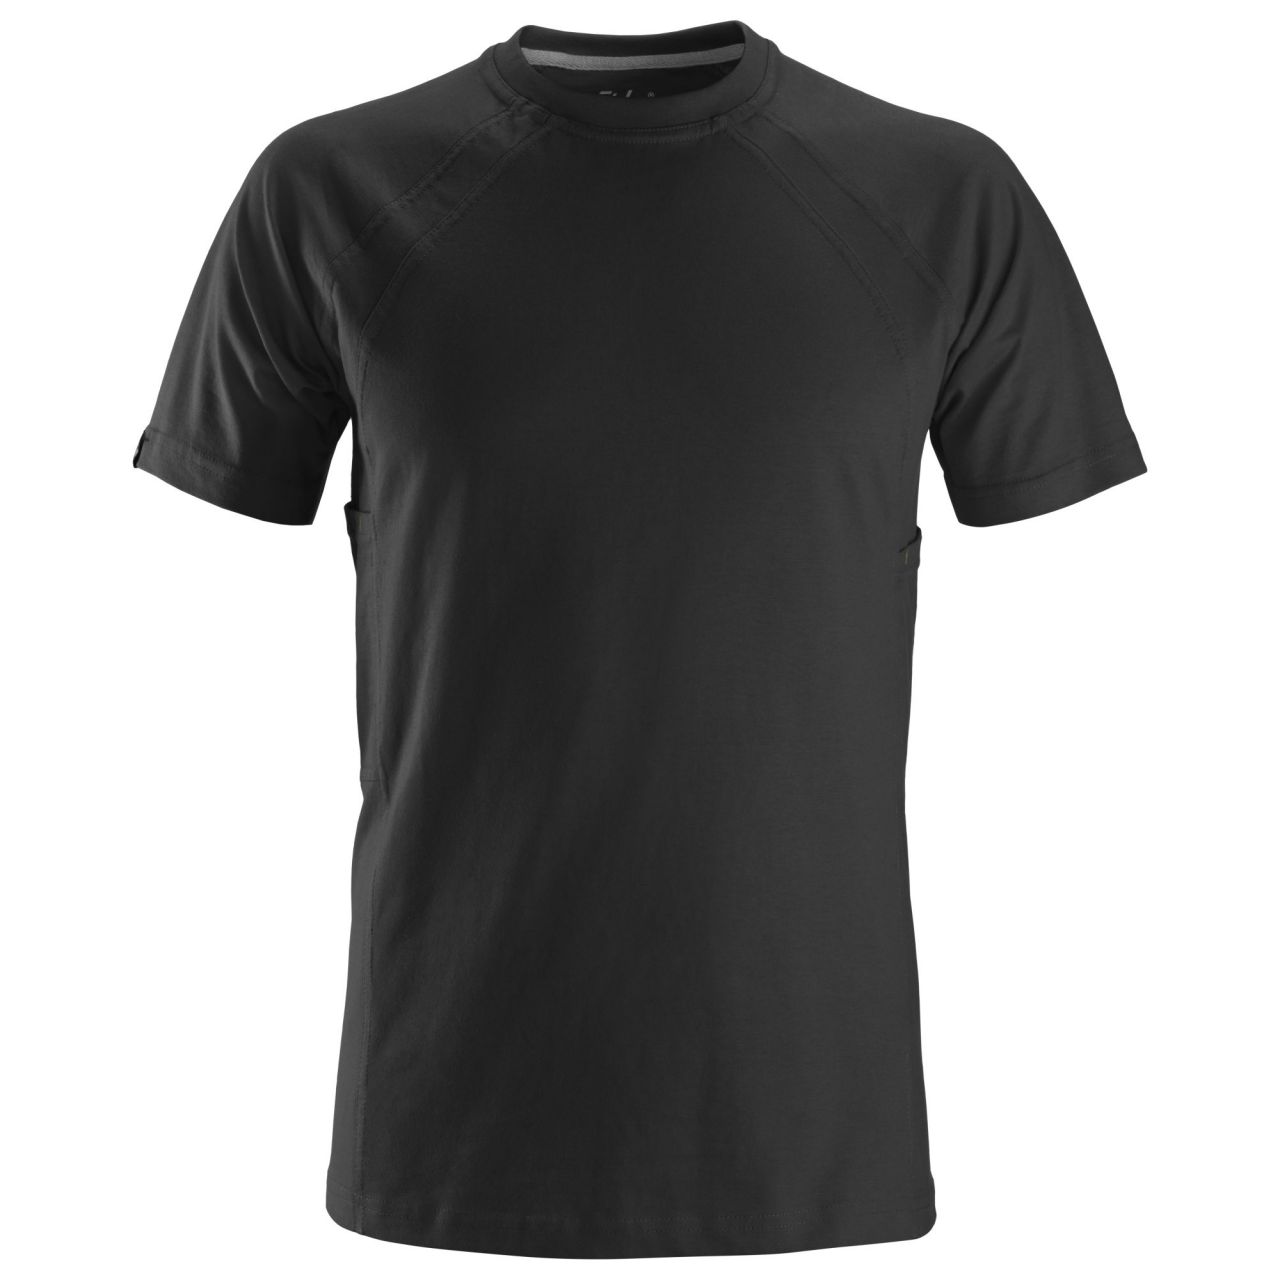 2504 Camiseta con MultiPockets™ negro talla S